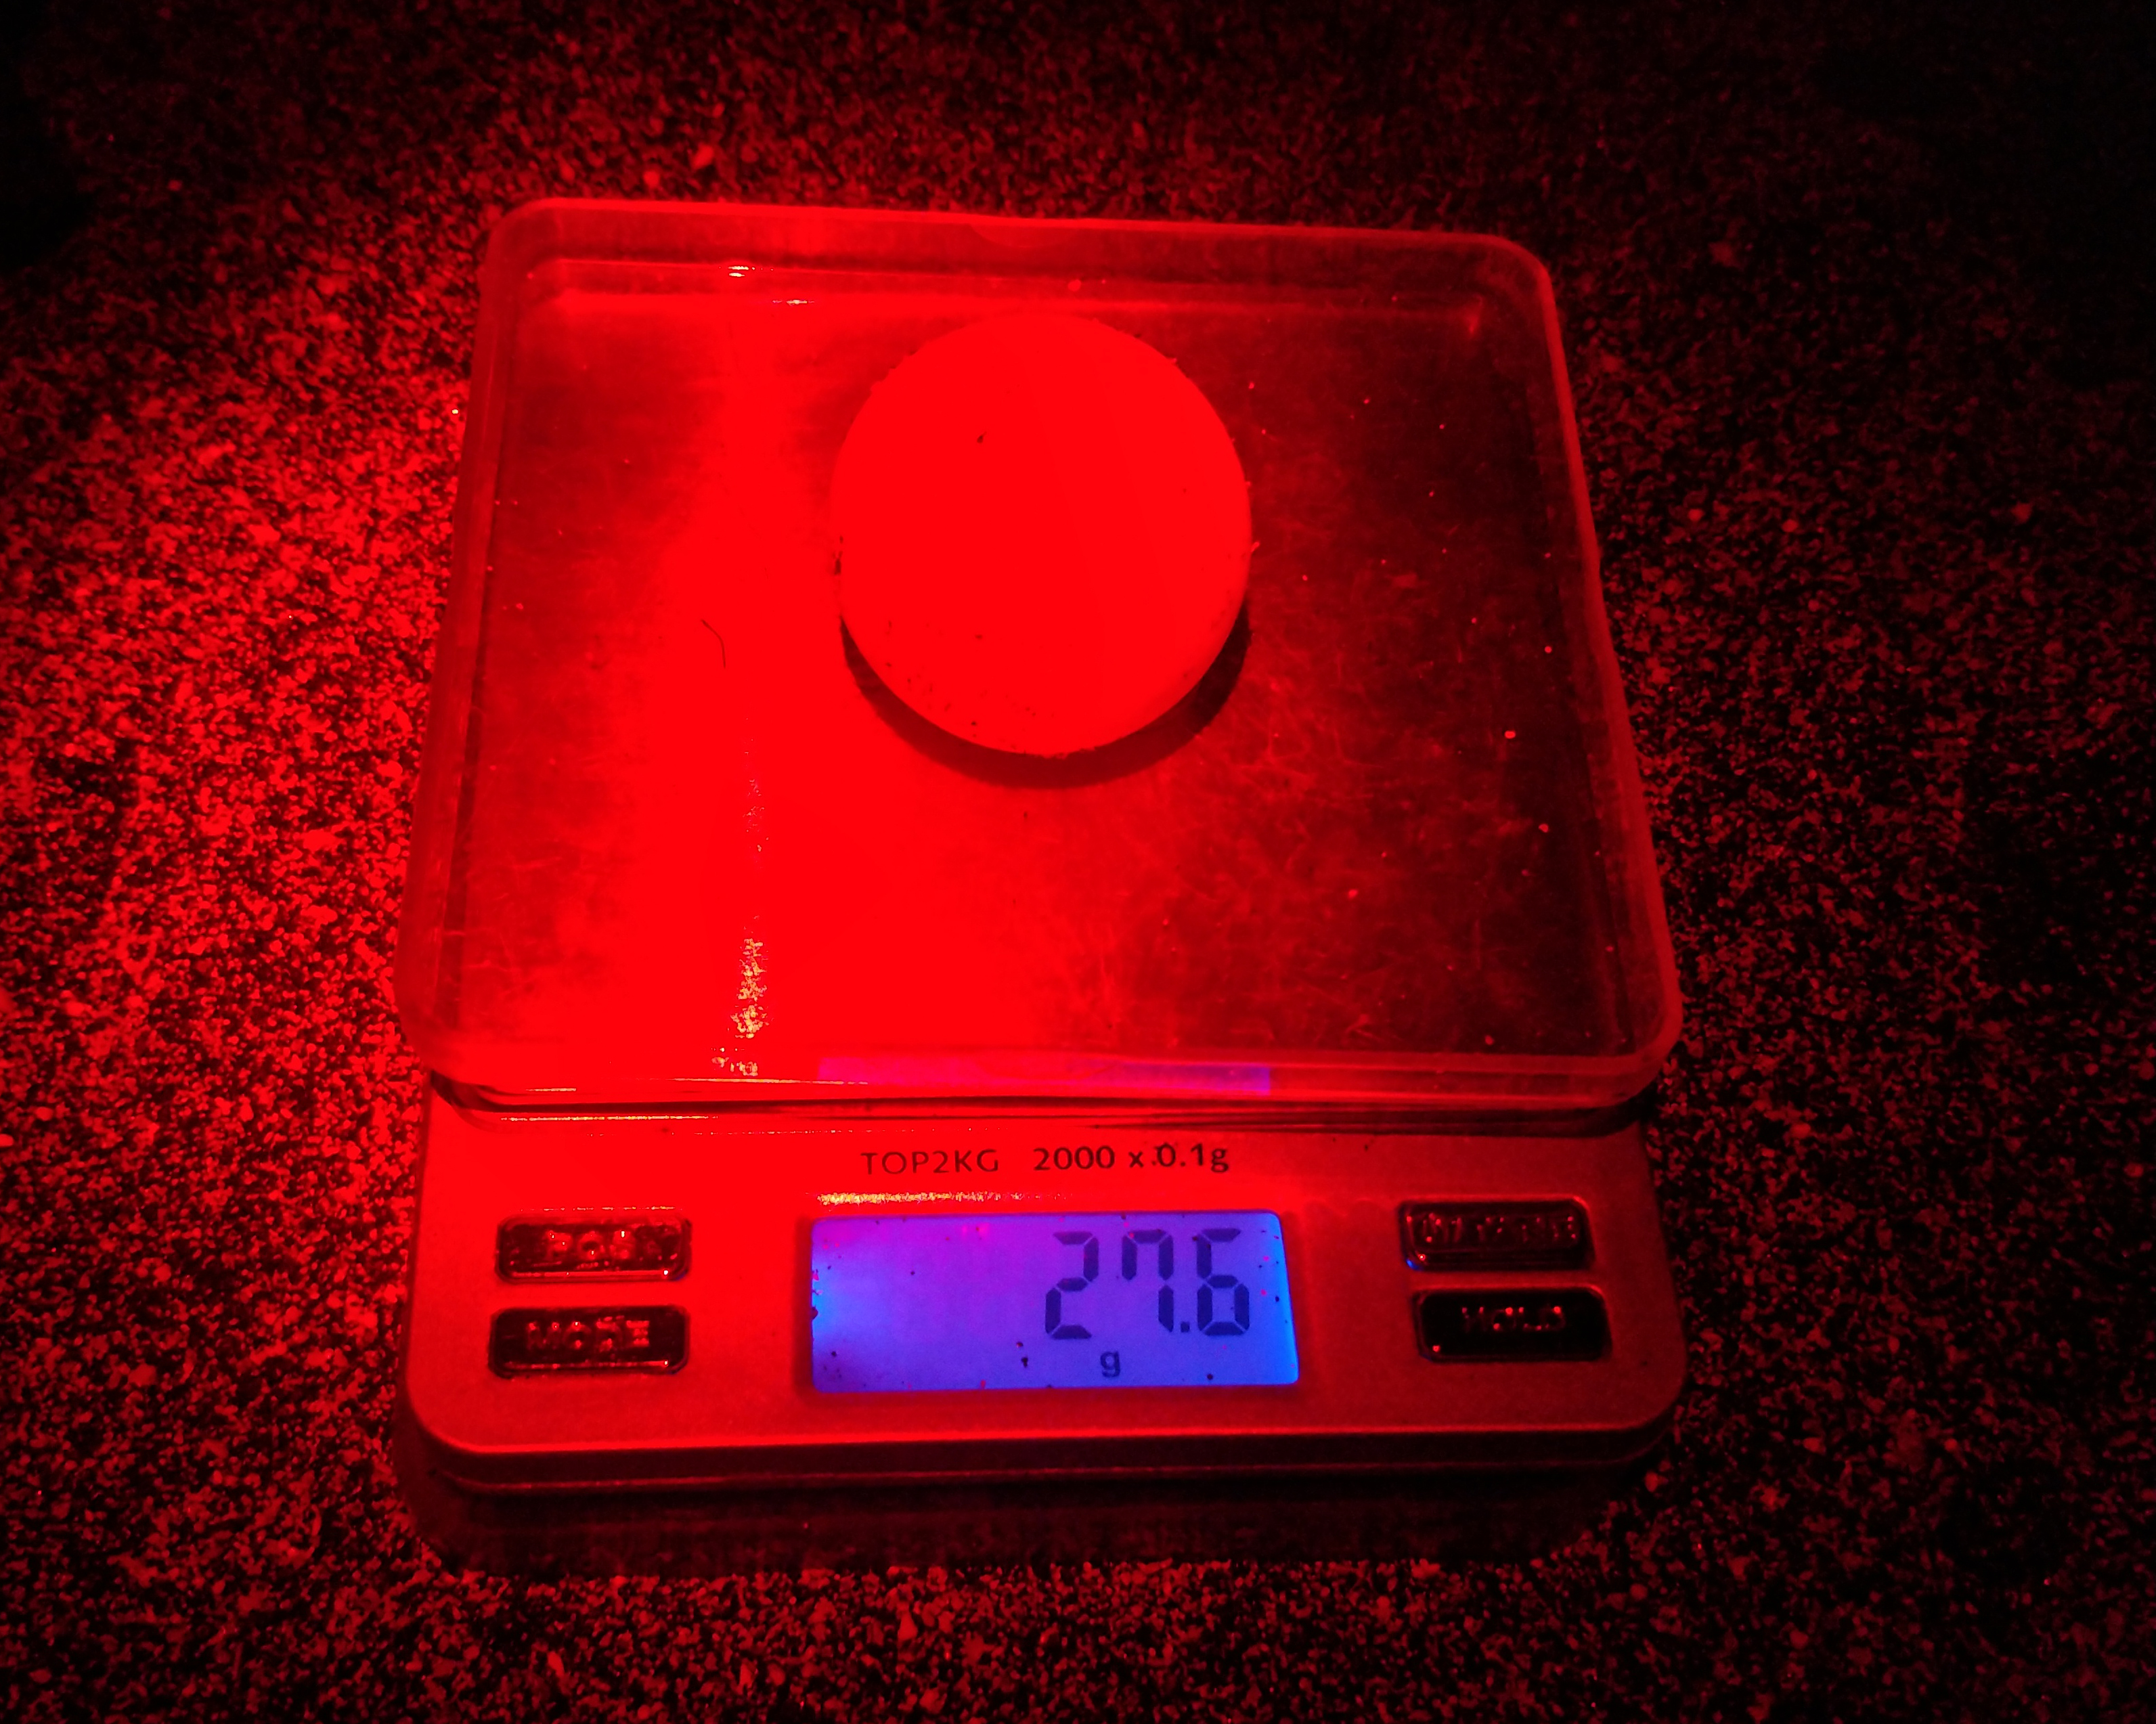 Weighting a loggerhead turtle egg